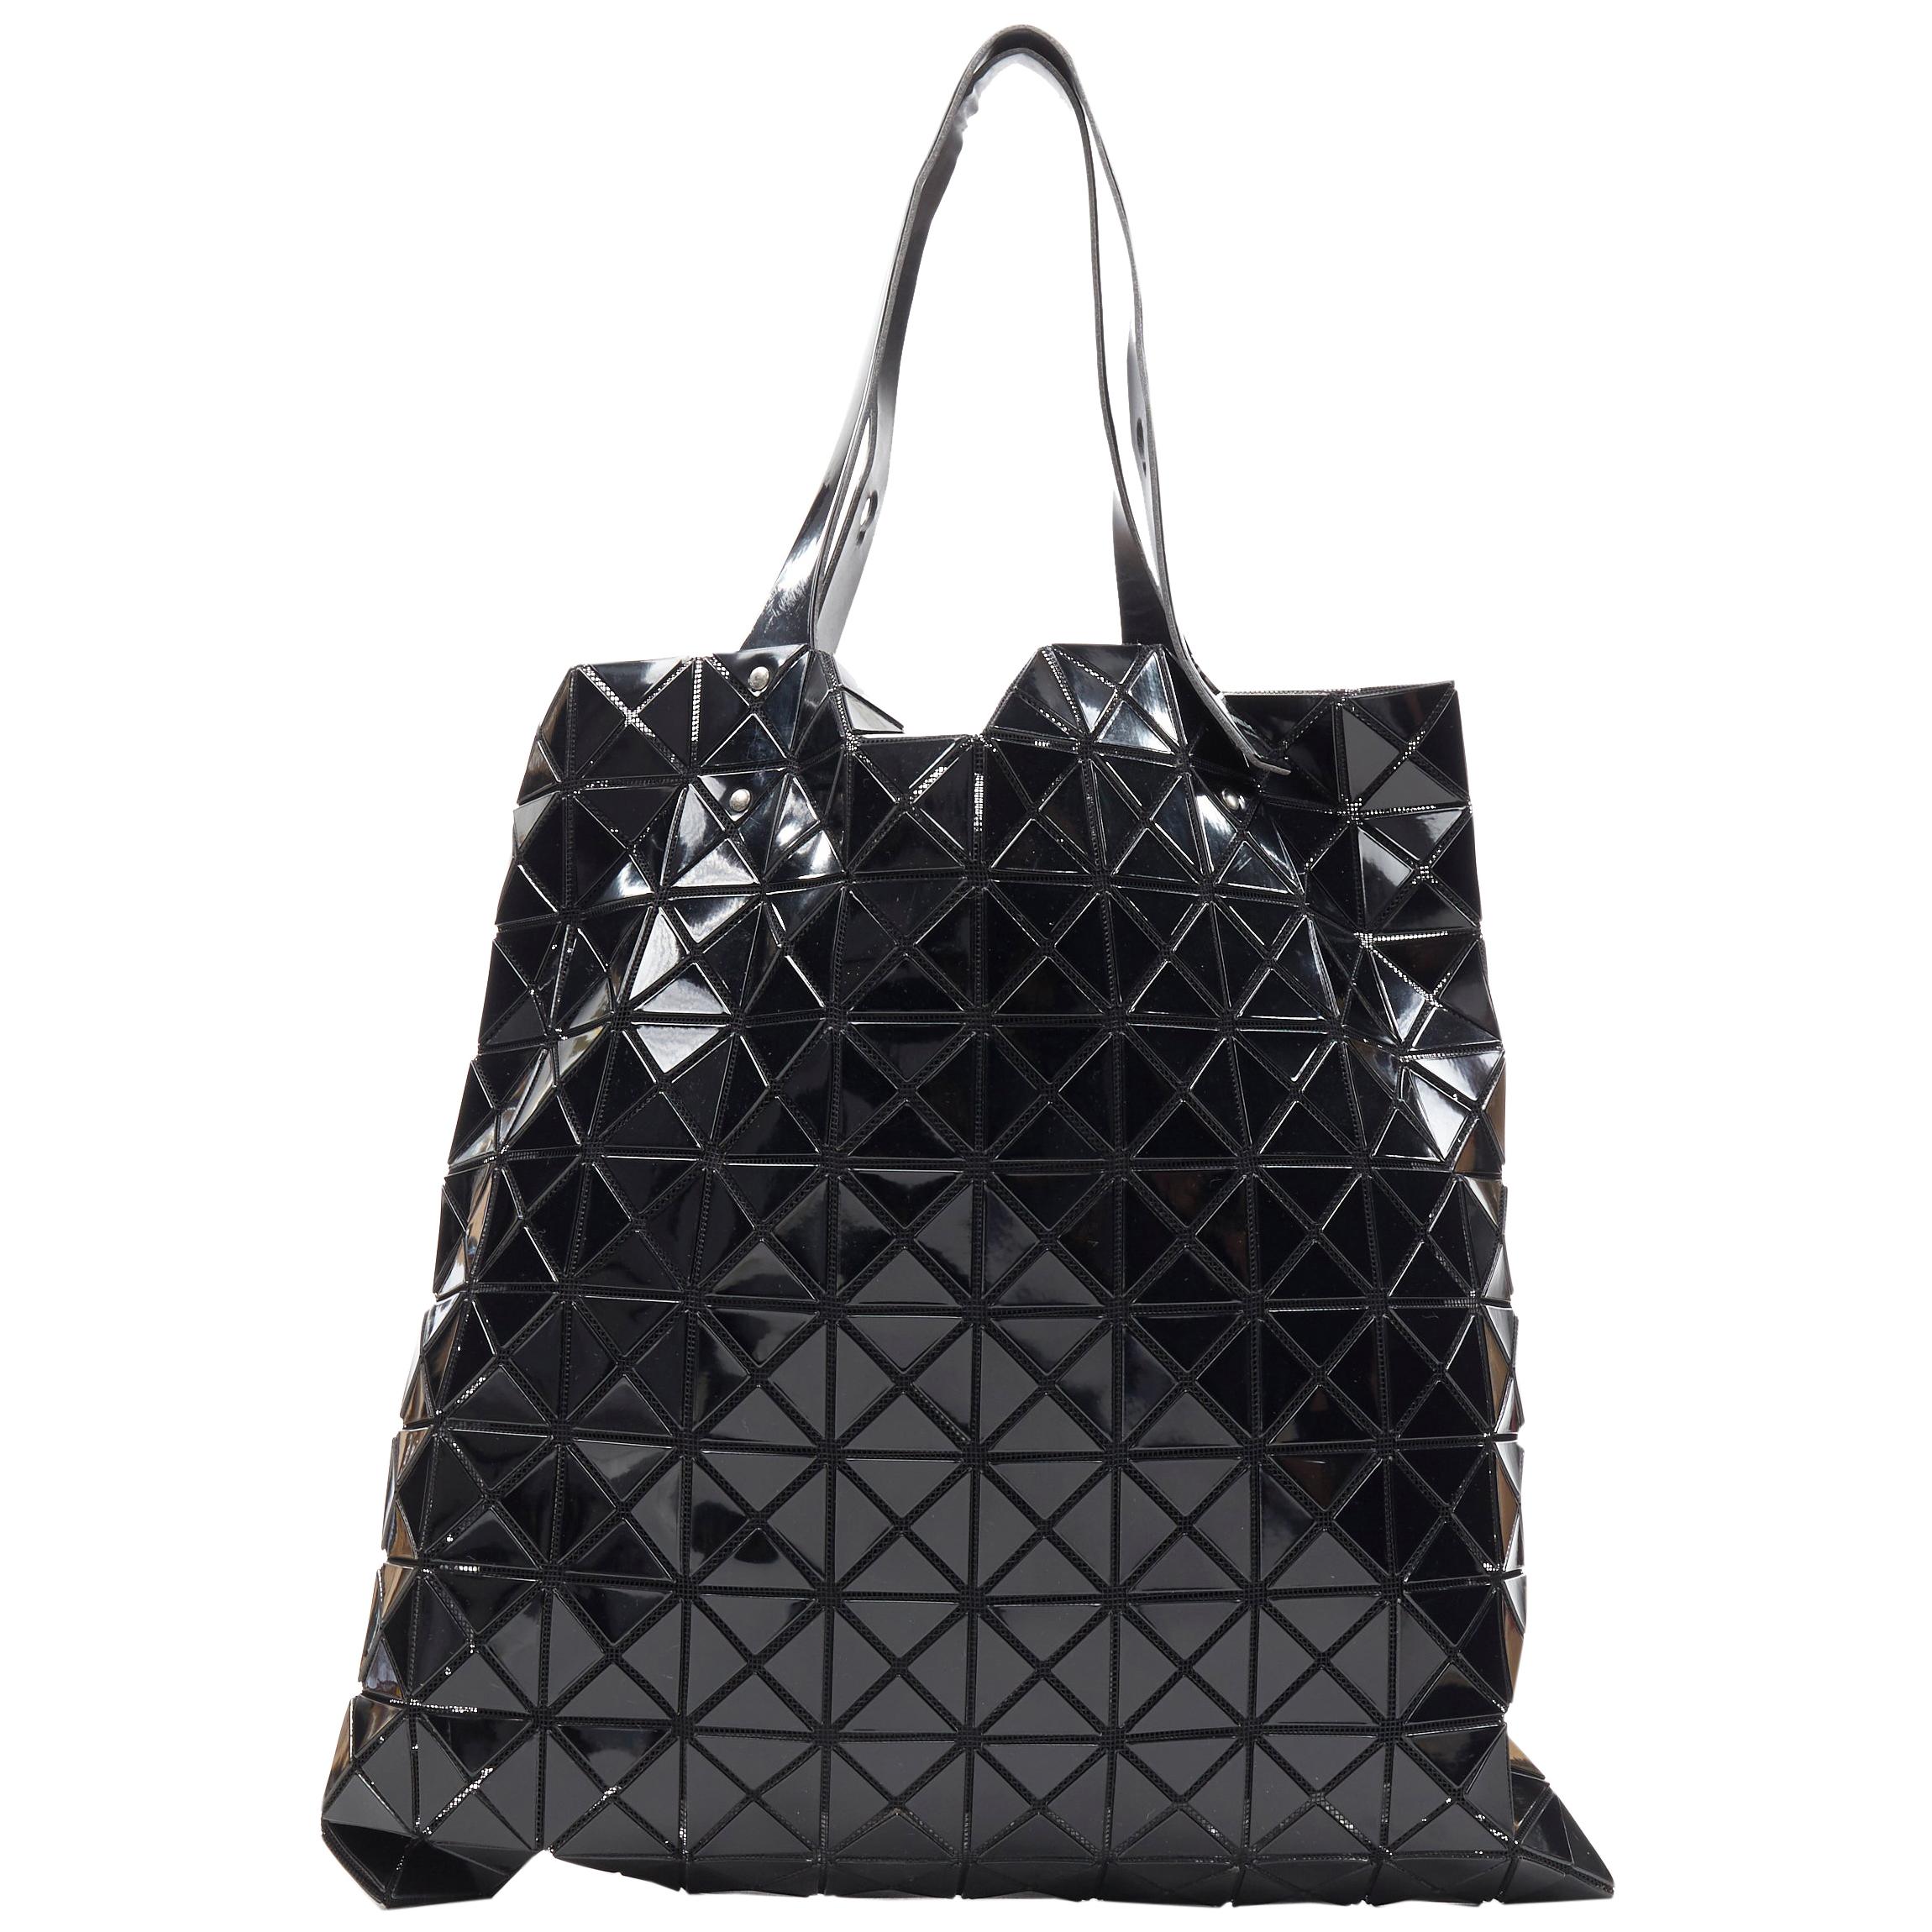 BAO BAO ISSEY MIYAKE Prism black PVC geometric mesh leather handle tote bag